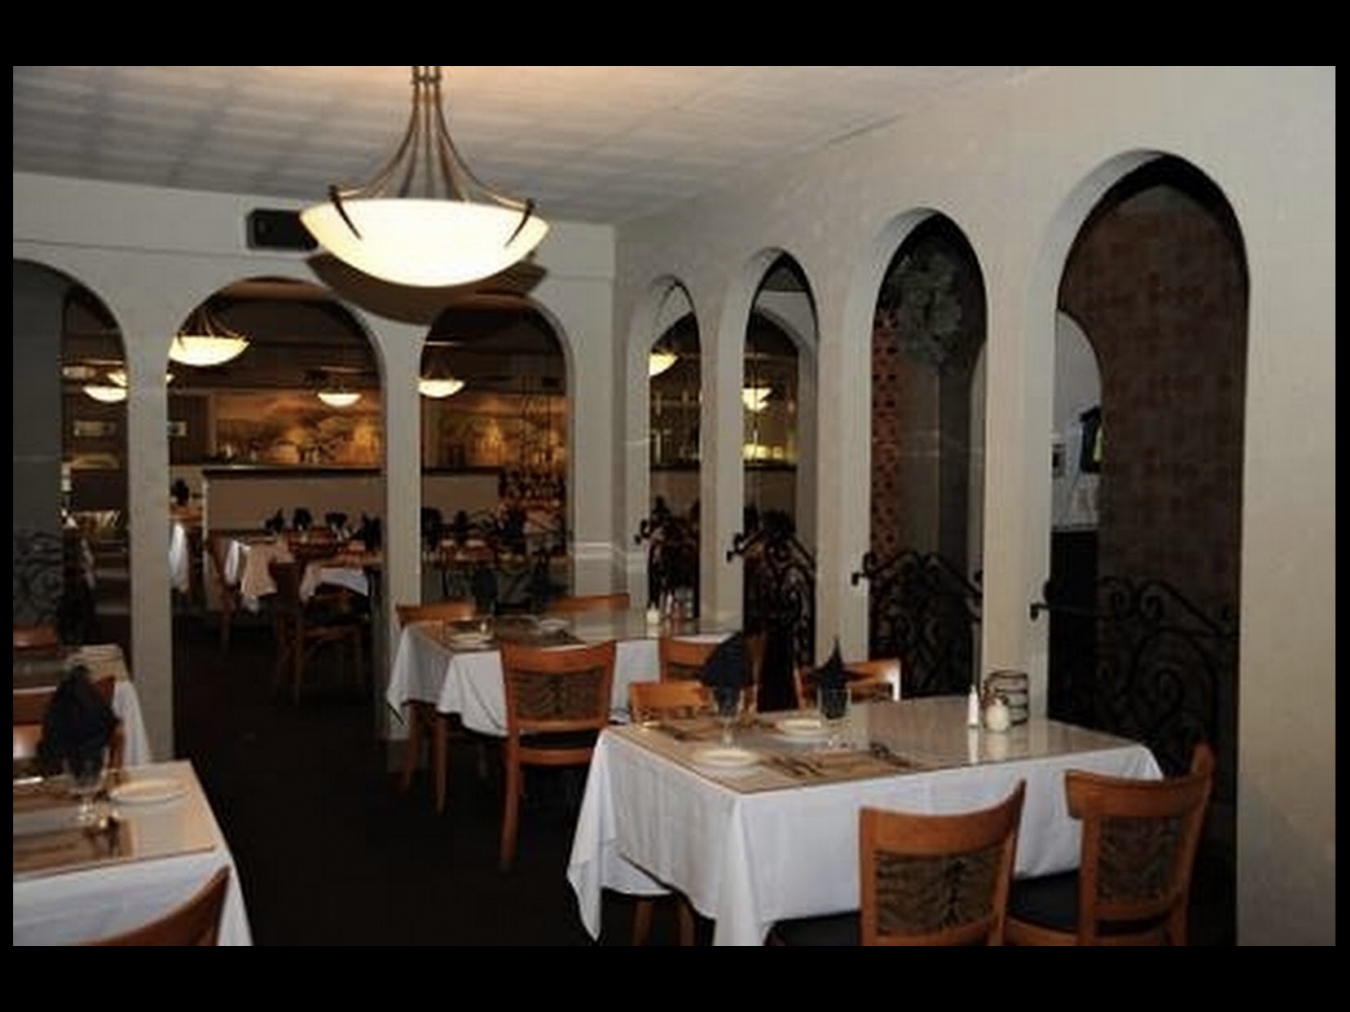 Fortuna's Restaurant Dining Room